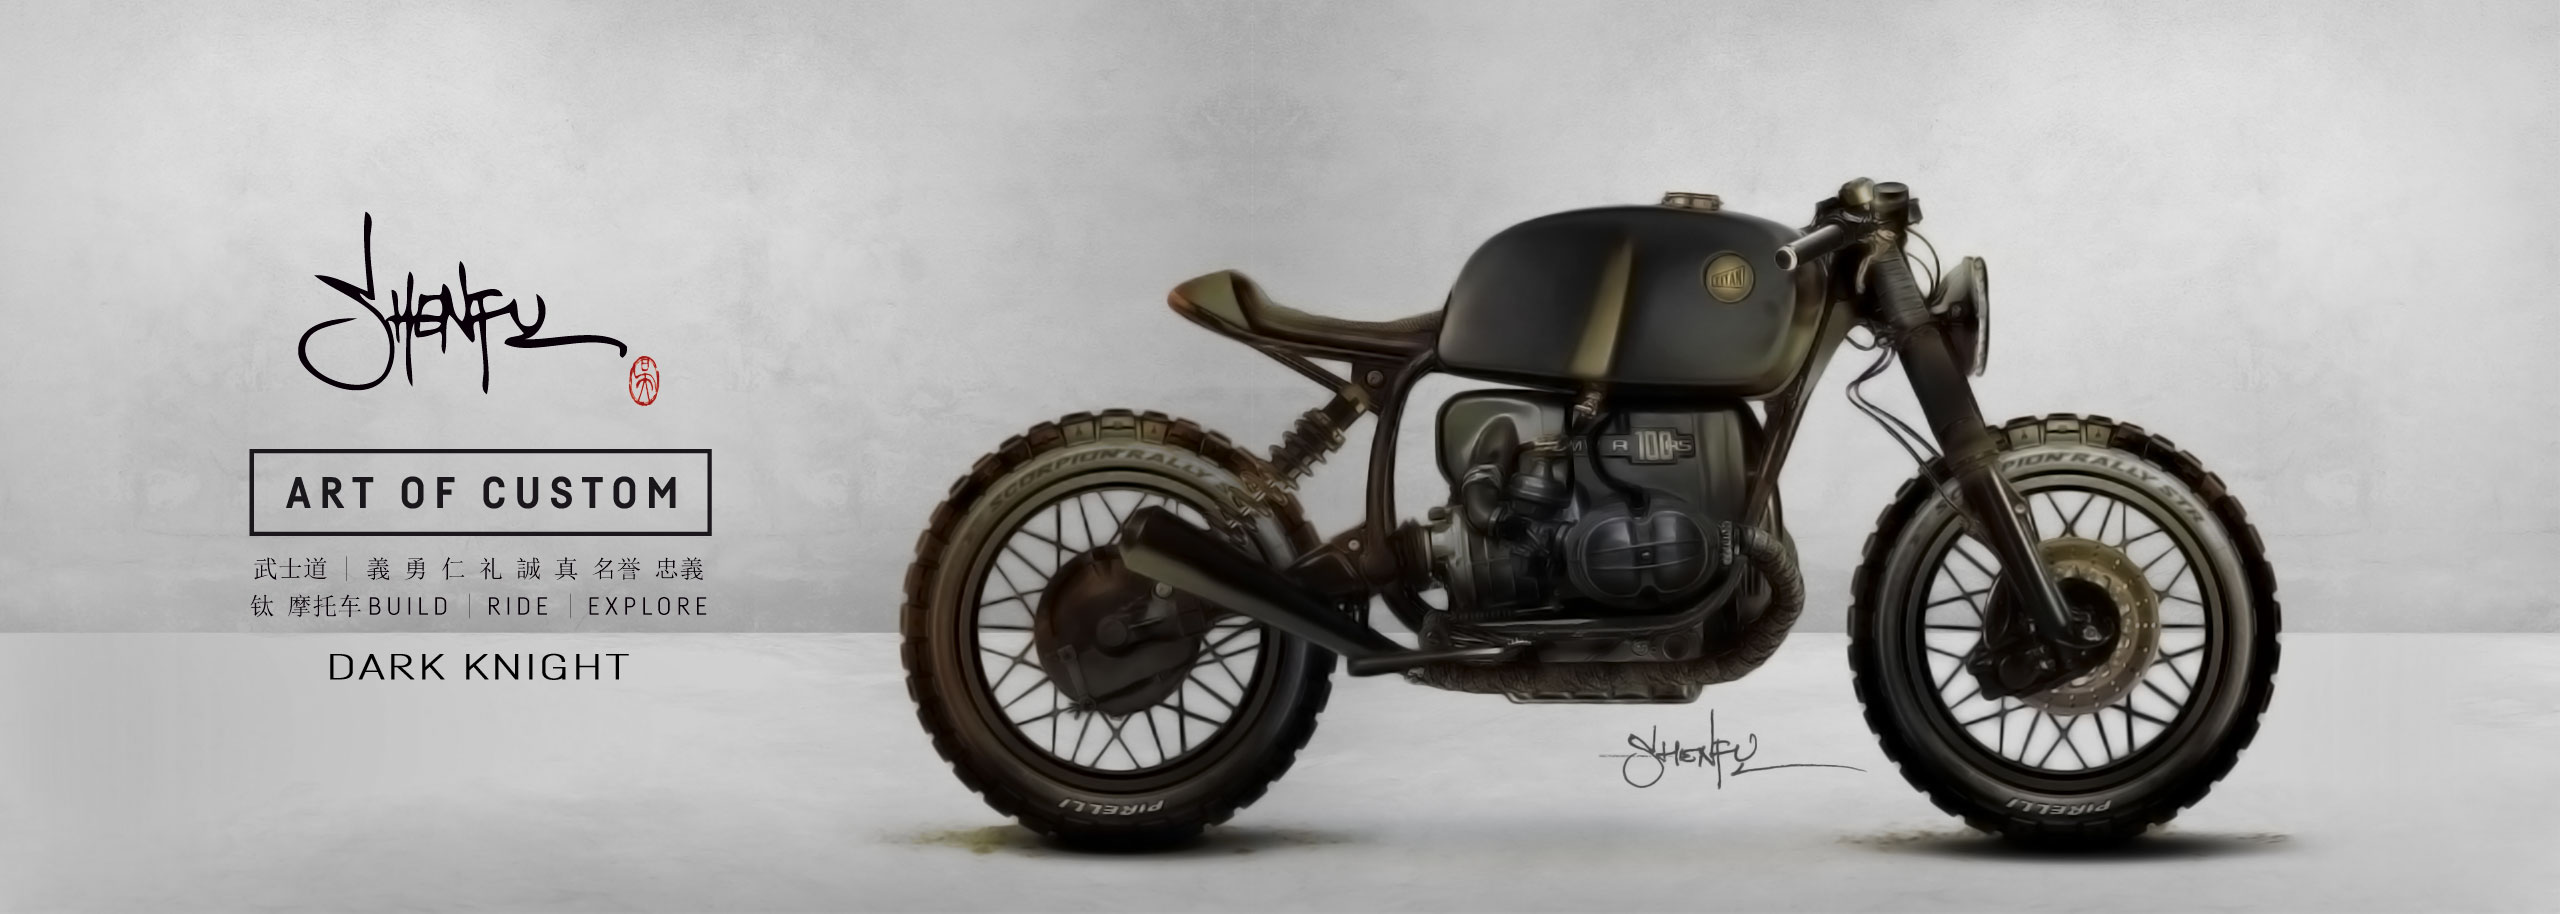 Titan-Motorcycle-Cafe-Racer-Graz-Bike-Concept-Art-Bike-Illustration-Idea-Inspiration-by-SHENFU-Illu-Custom-Bikes-Drawing_Bmw-Dark-Knight